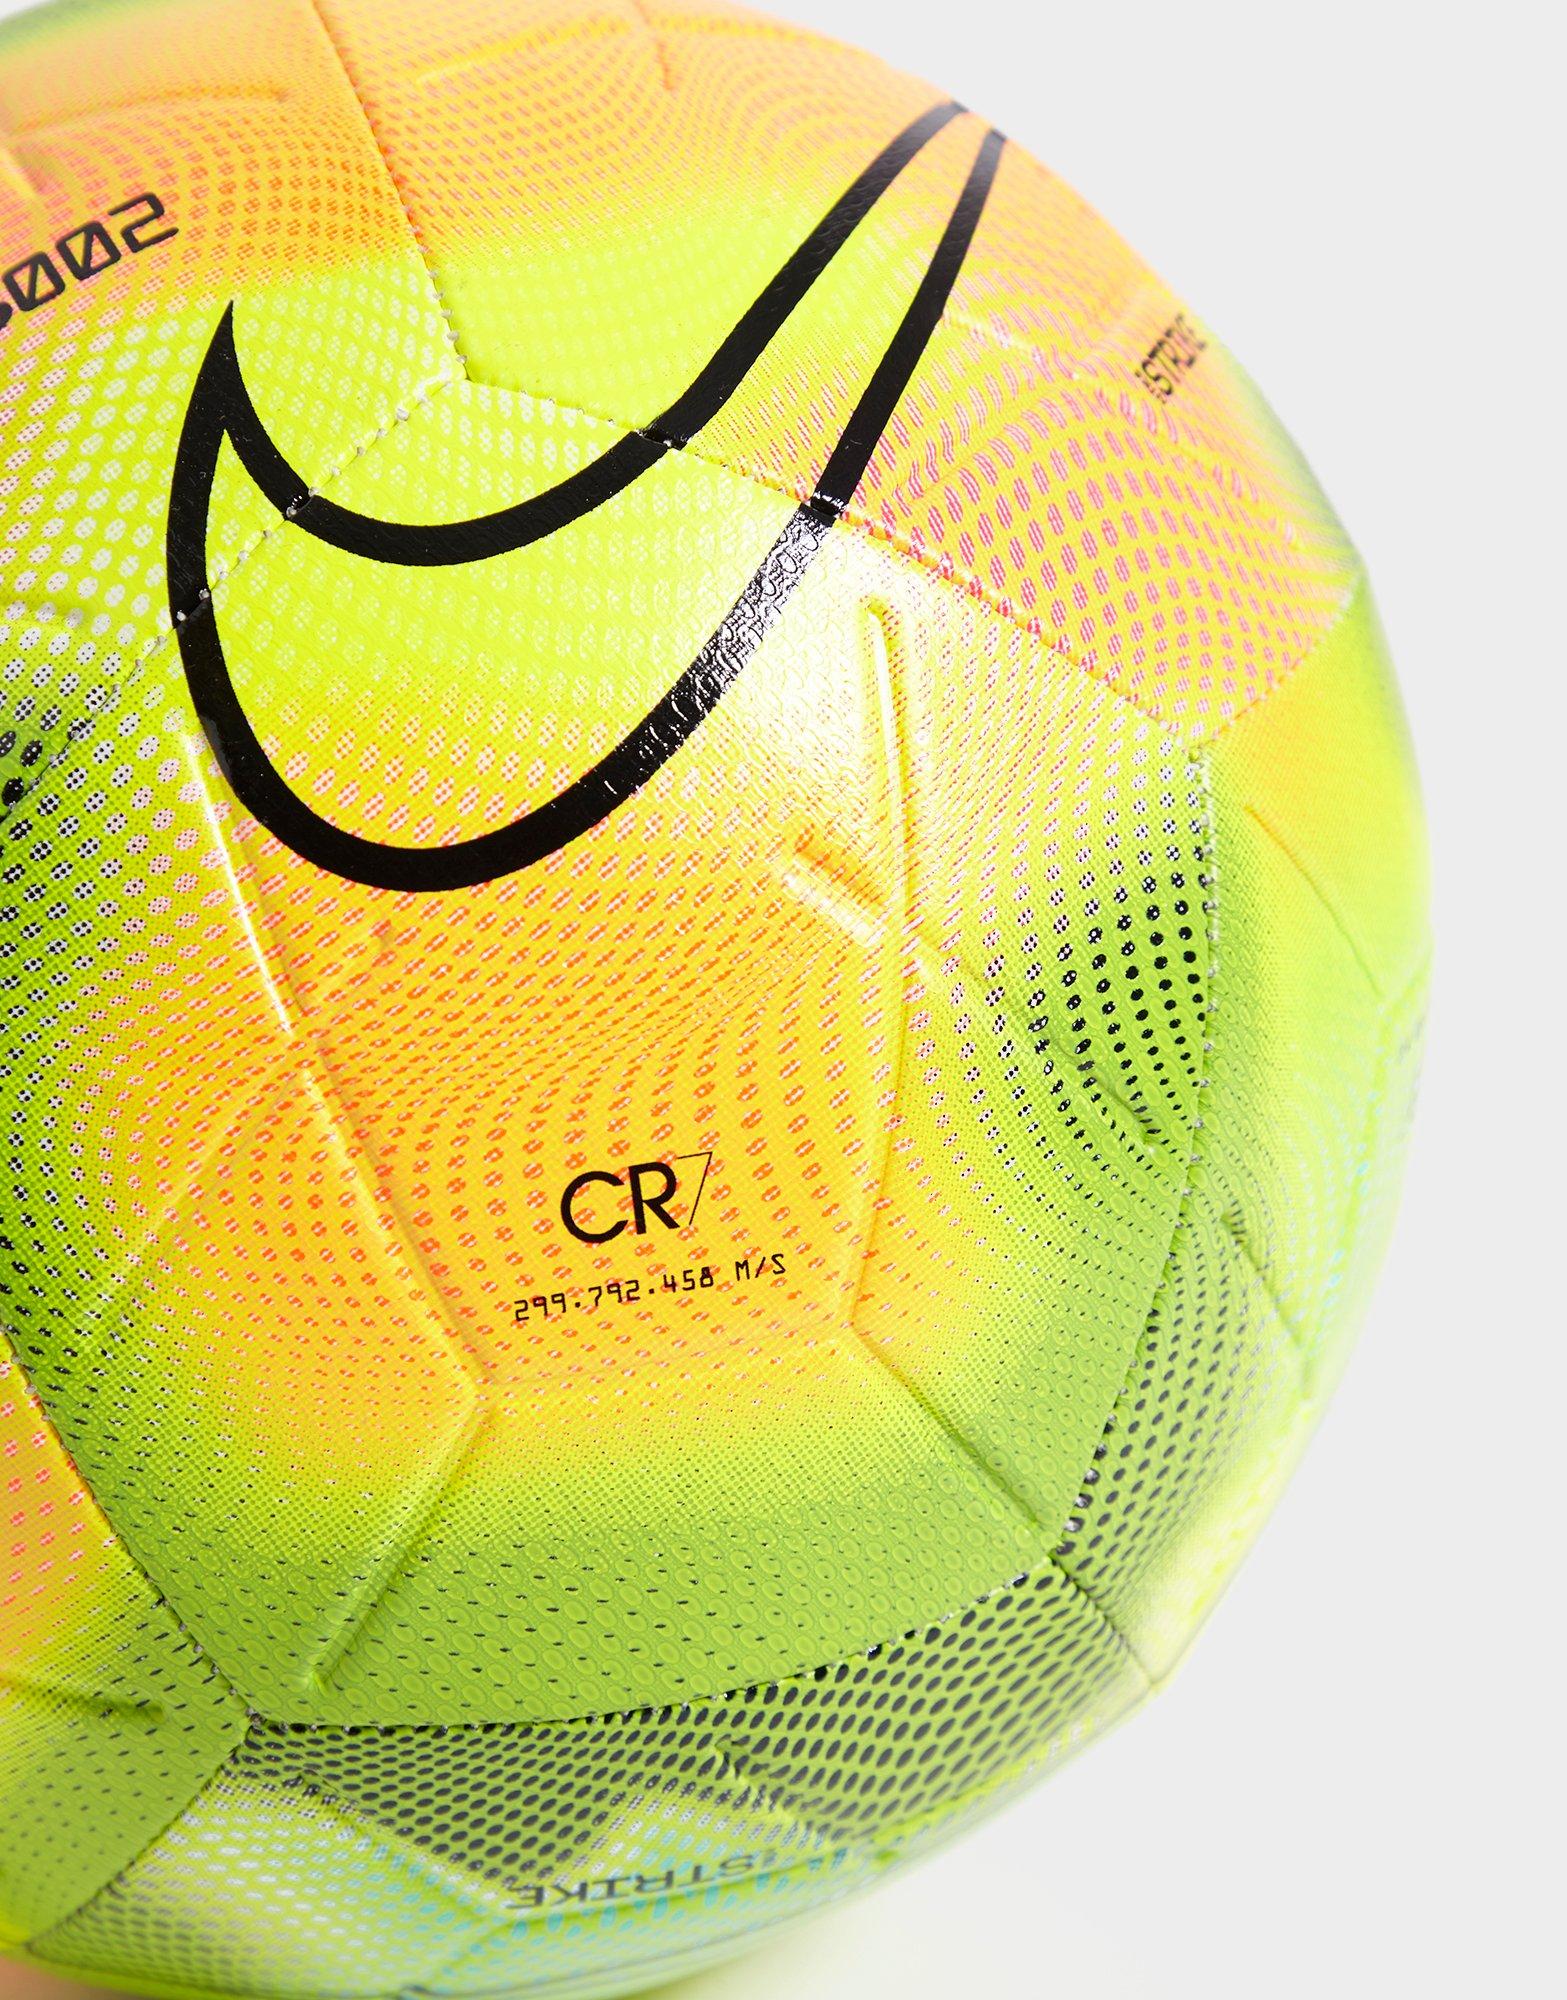 Nike Strike Cr7 Cristiano Ronaldo Soccer Ball Official Sz5 .